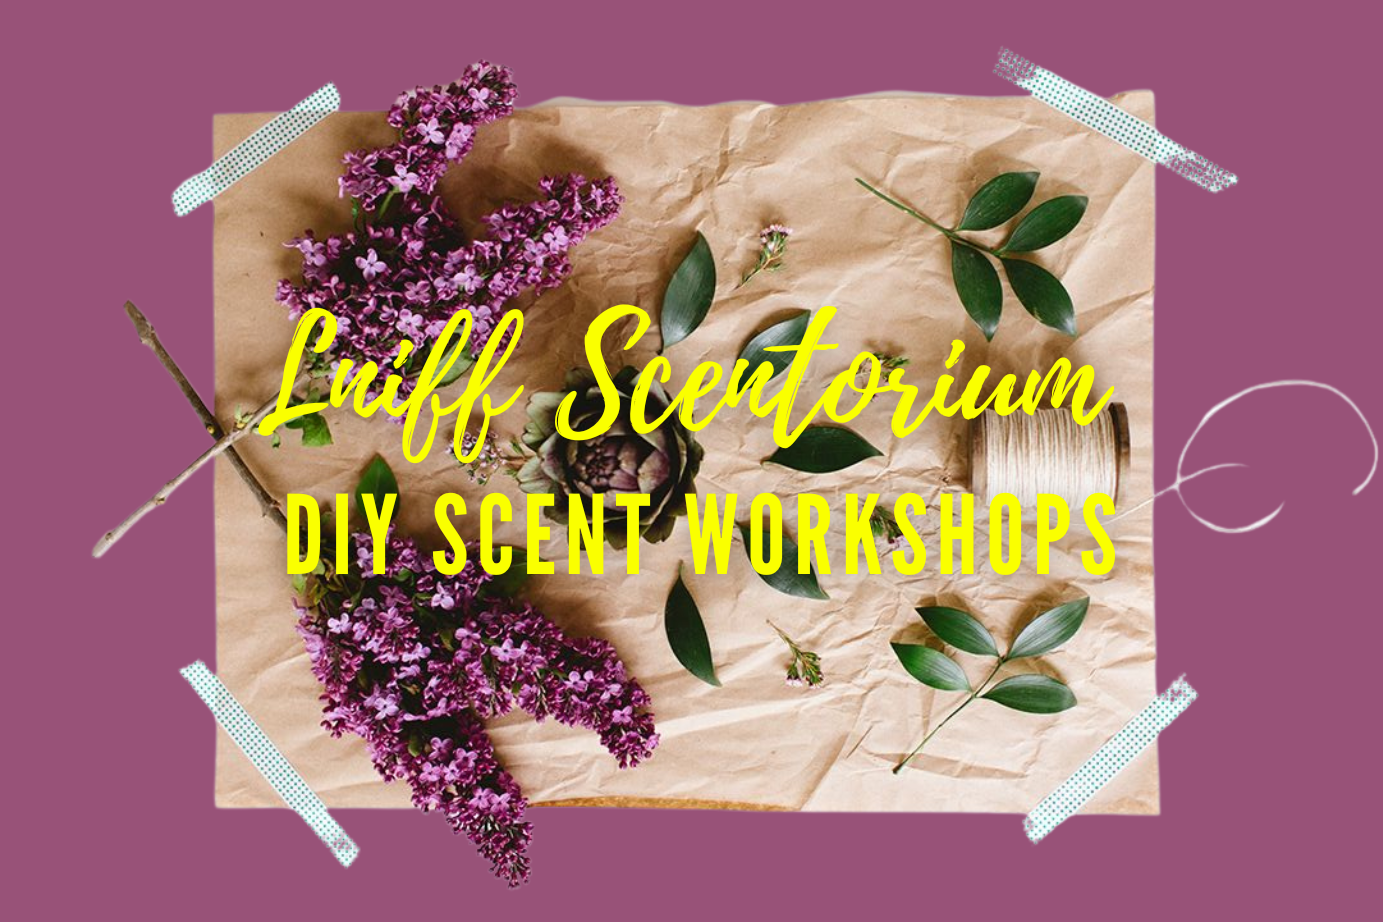 Sniff Scentorium DIY Workshops